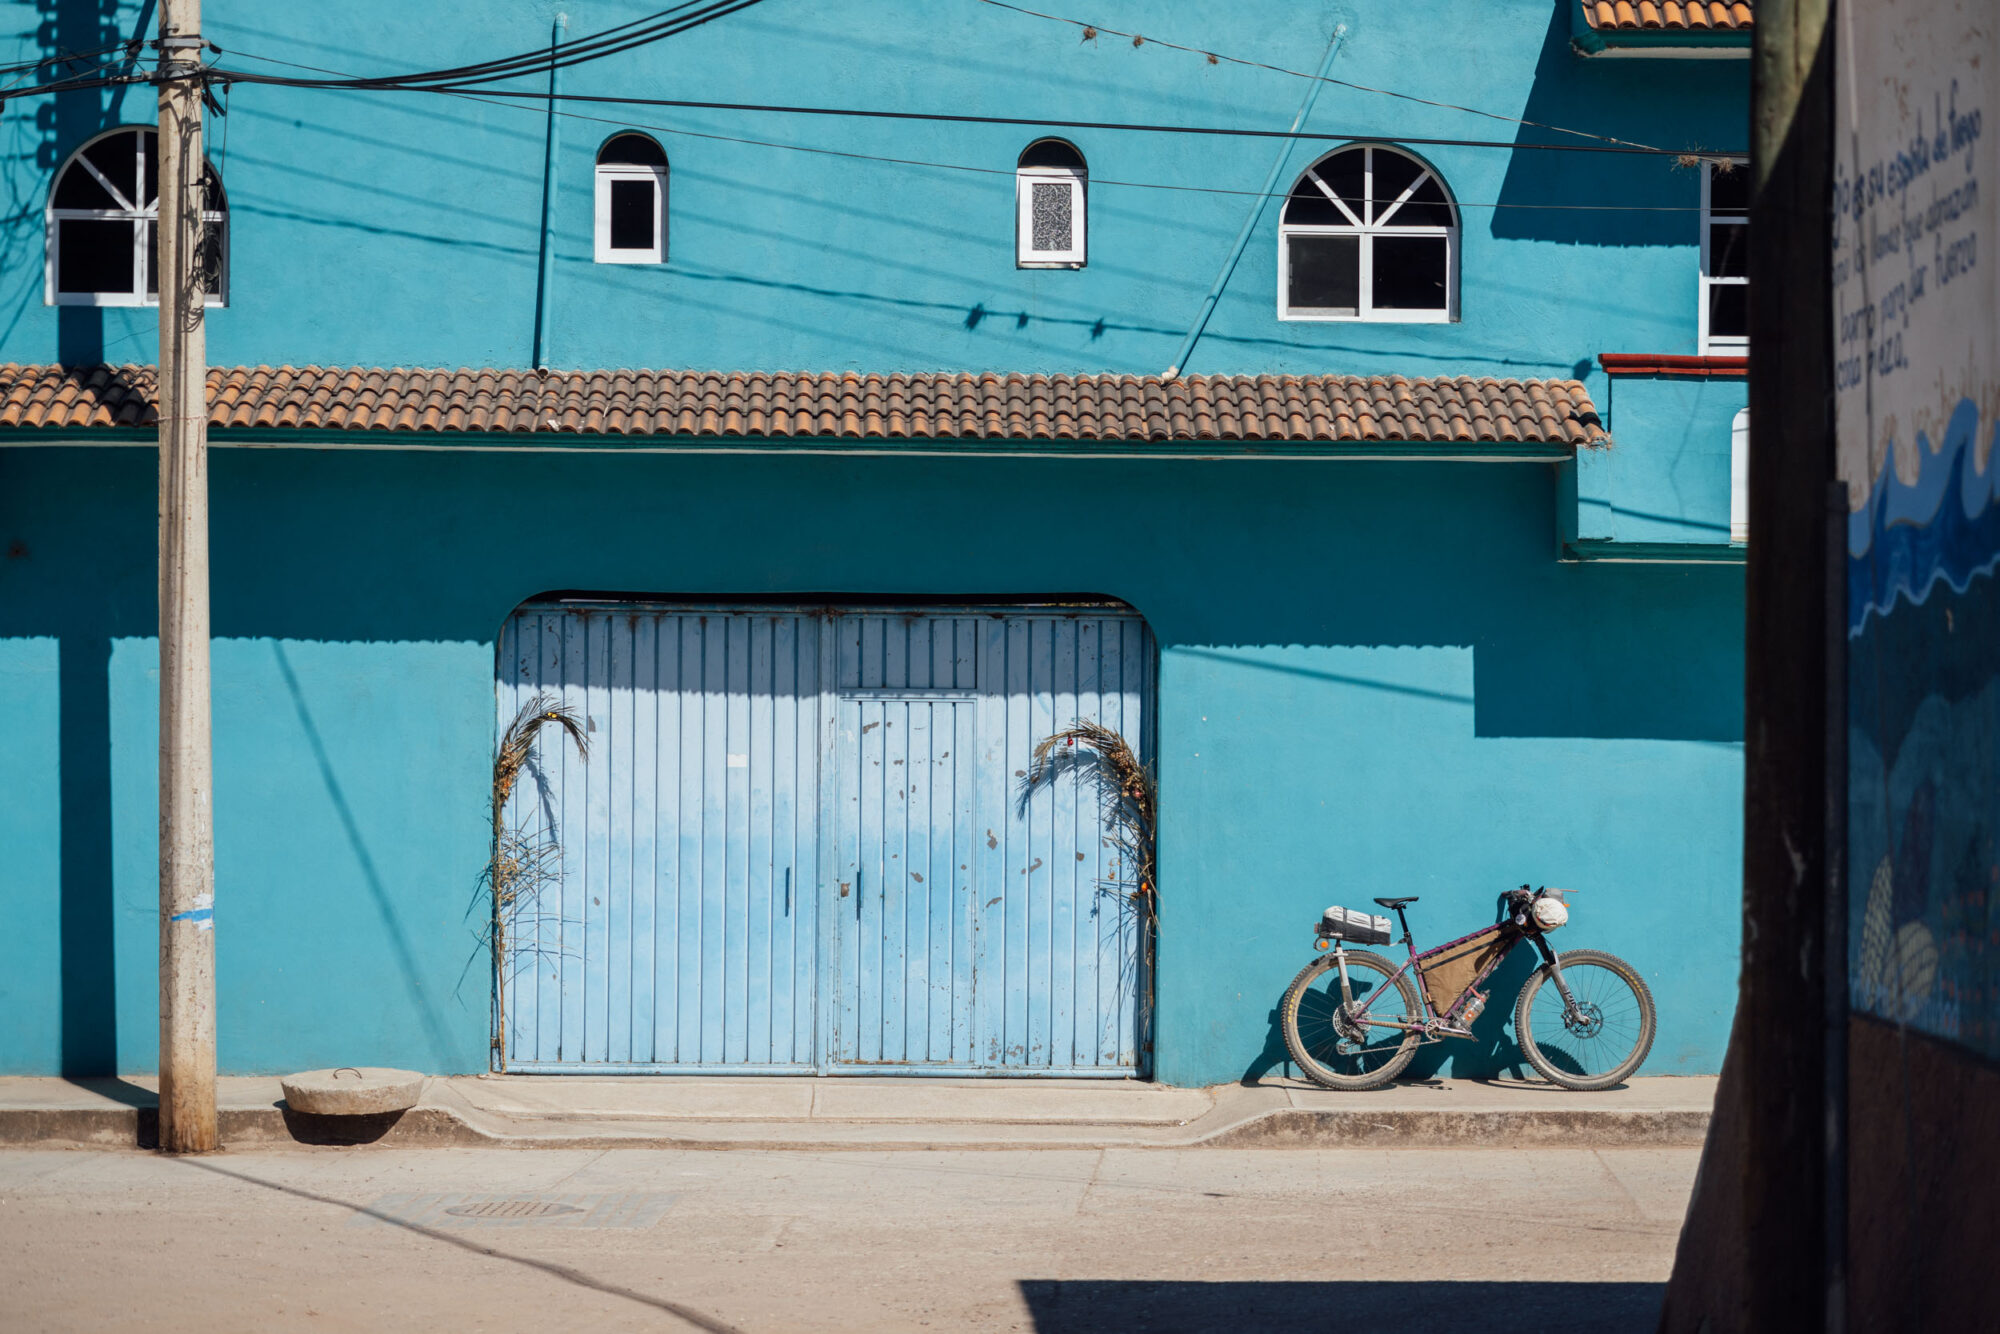 Choosing a bike for Oaxaca